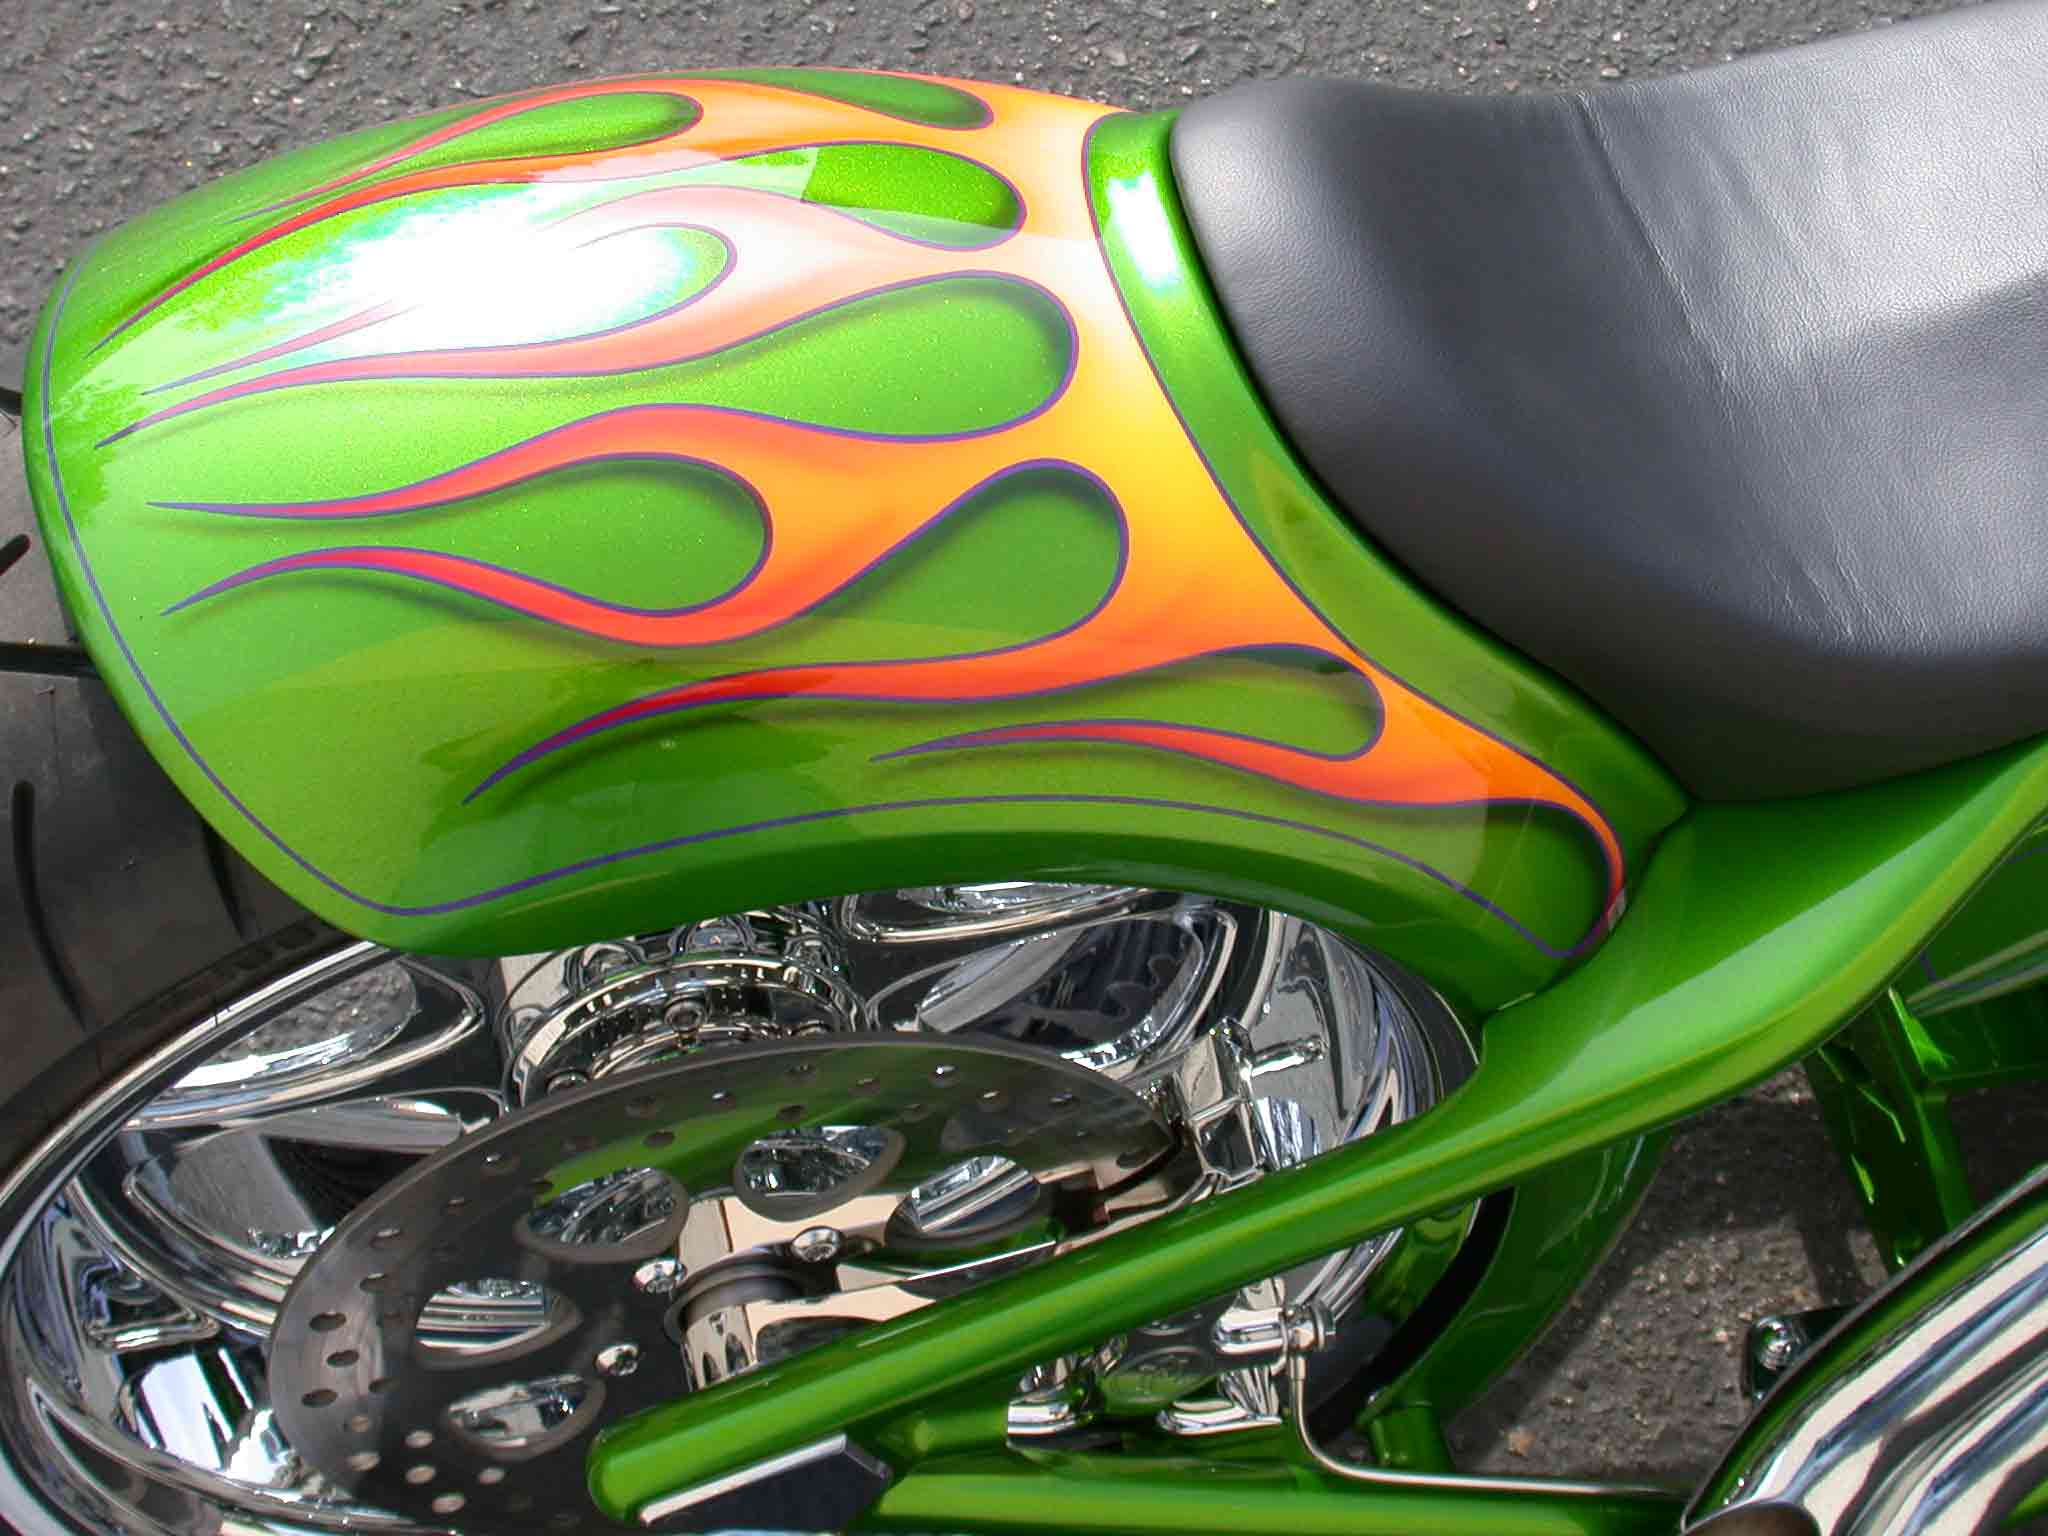  Custom Green Motorcycle 